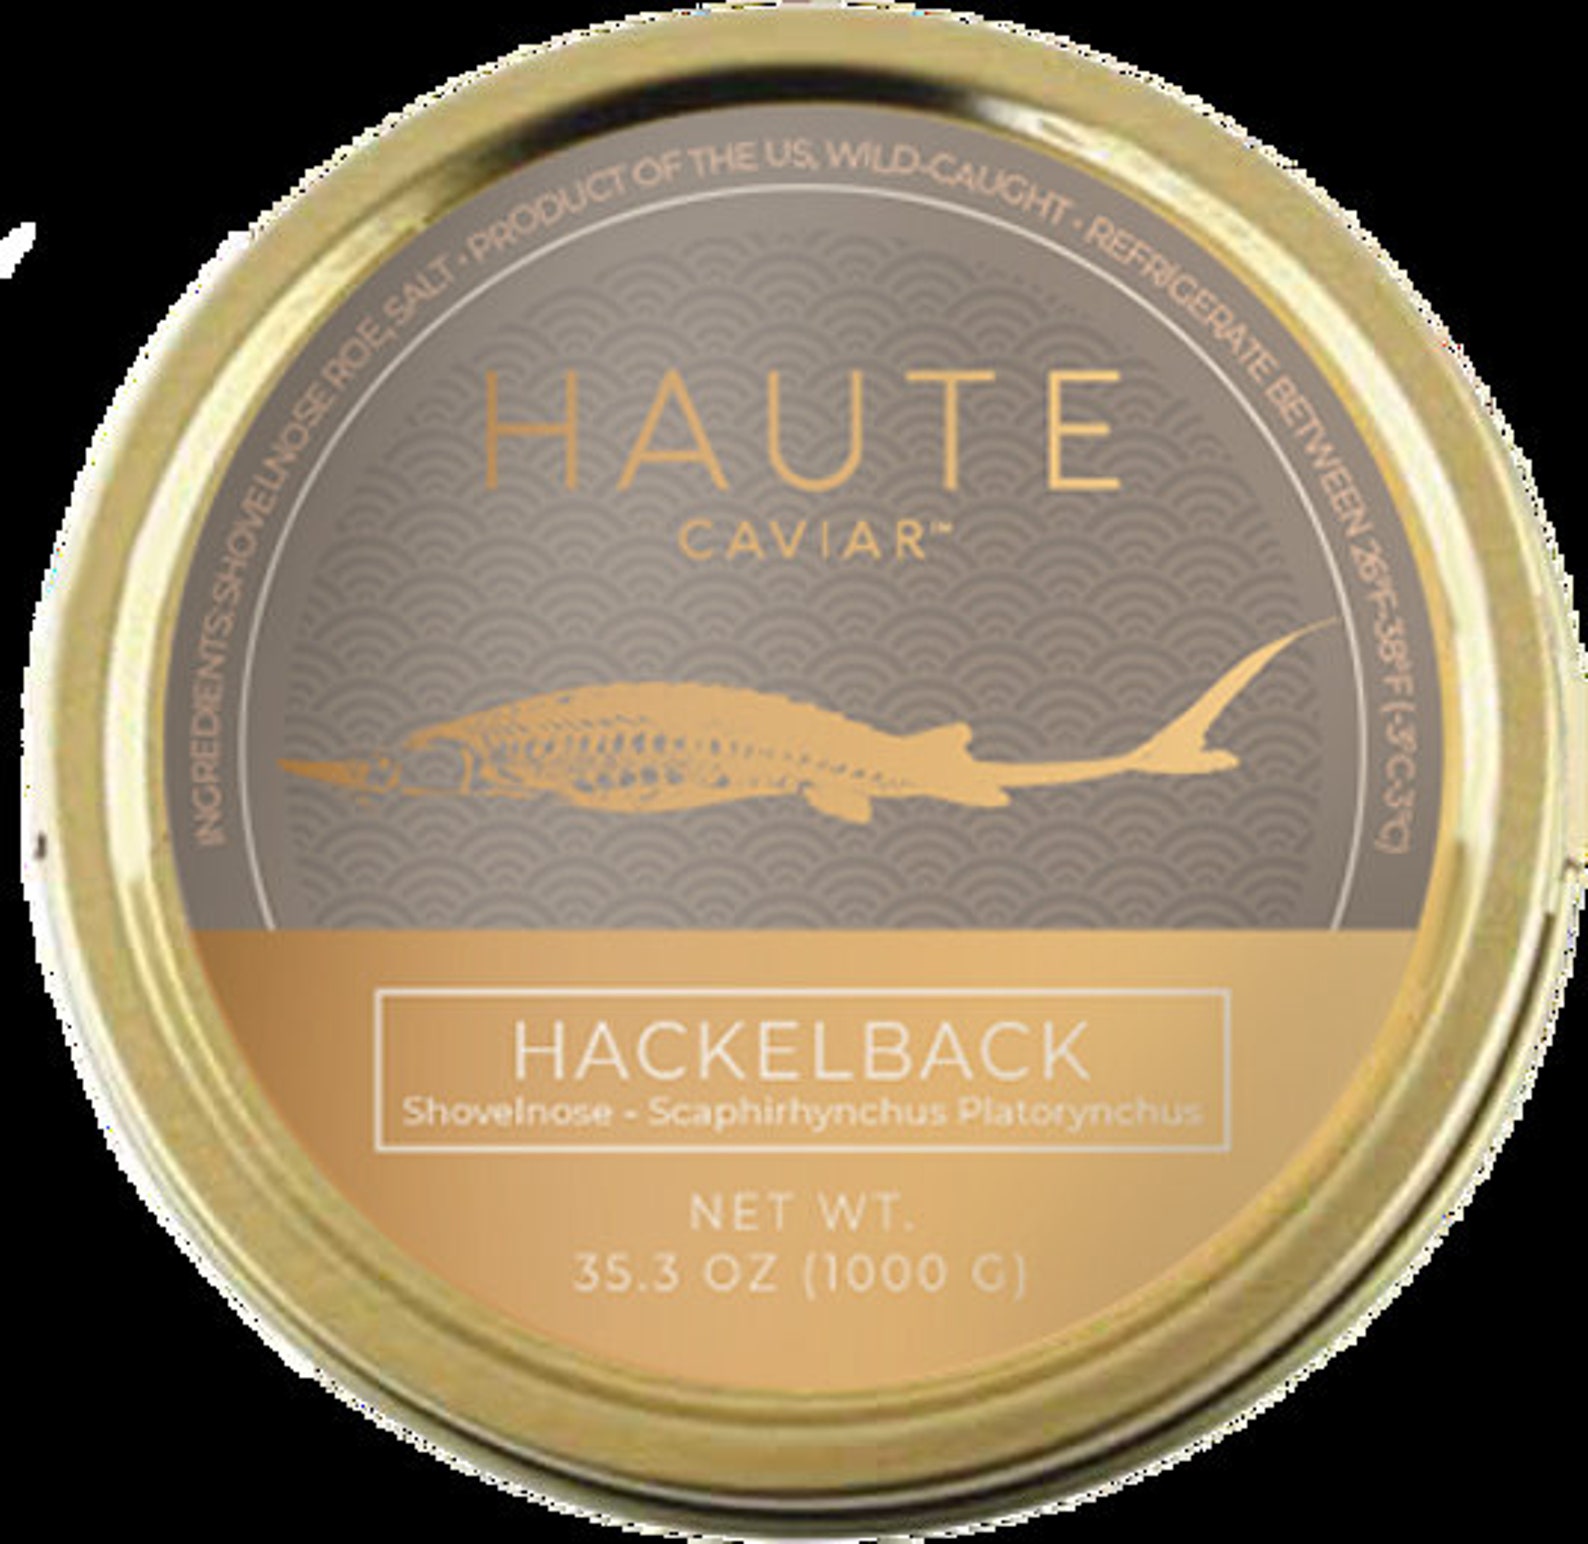 Hackleback Caviar 35.3 OZ 1000G Etsy